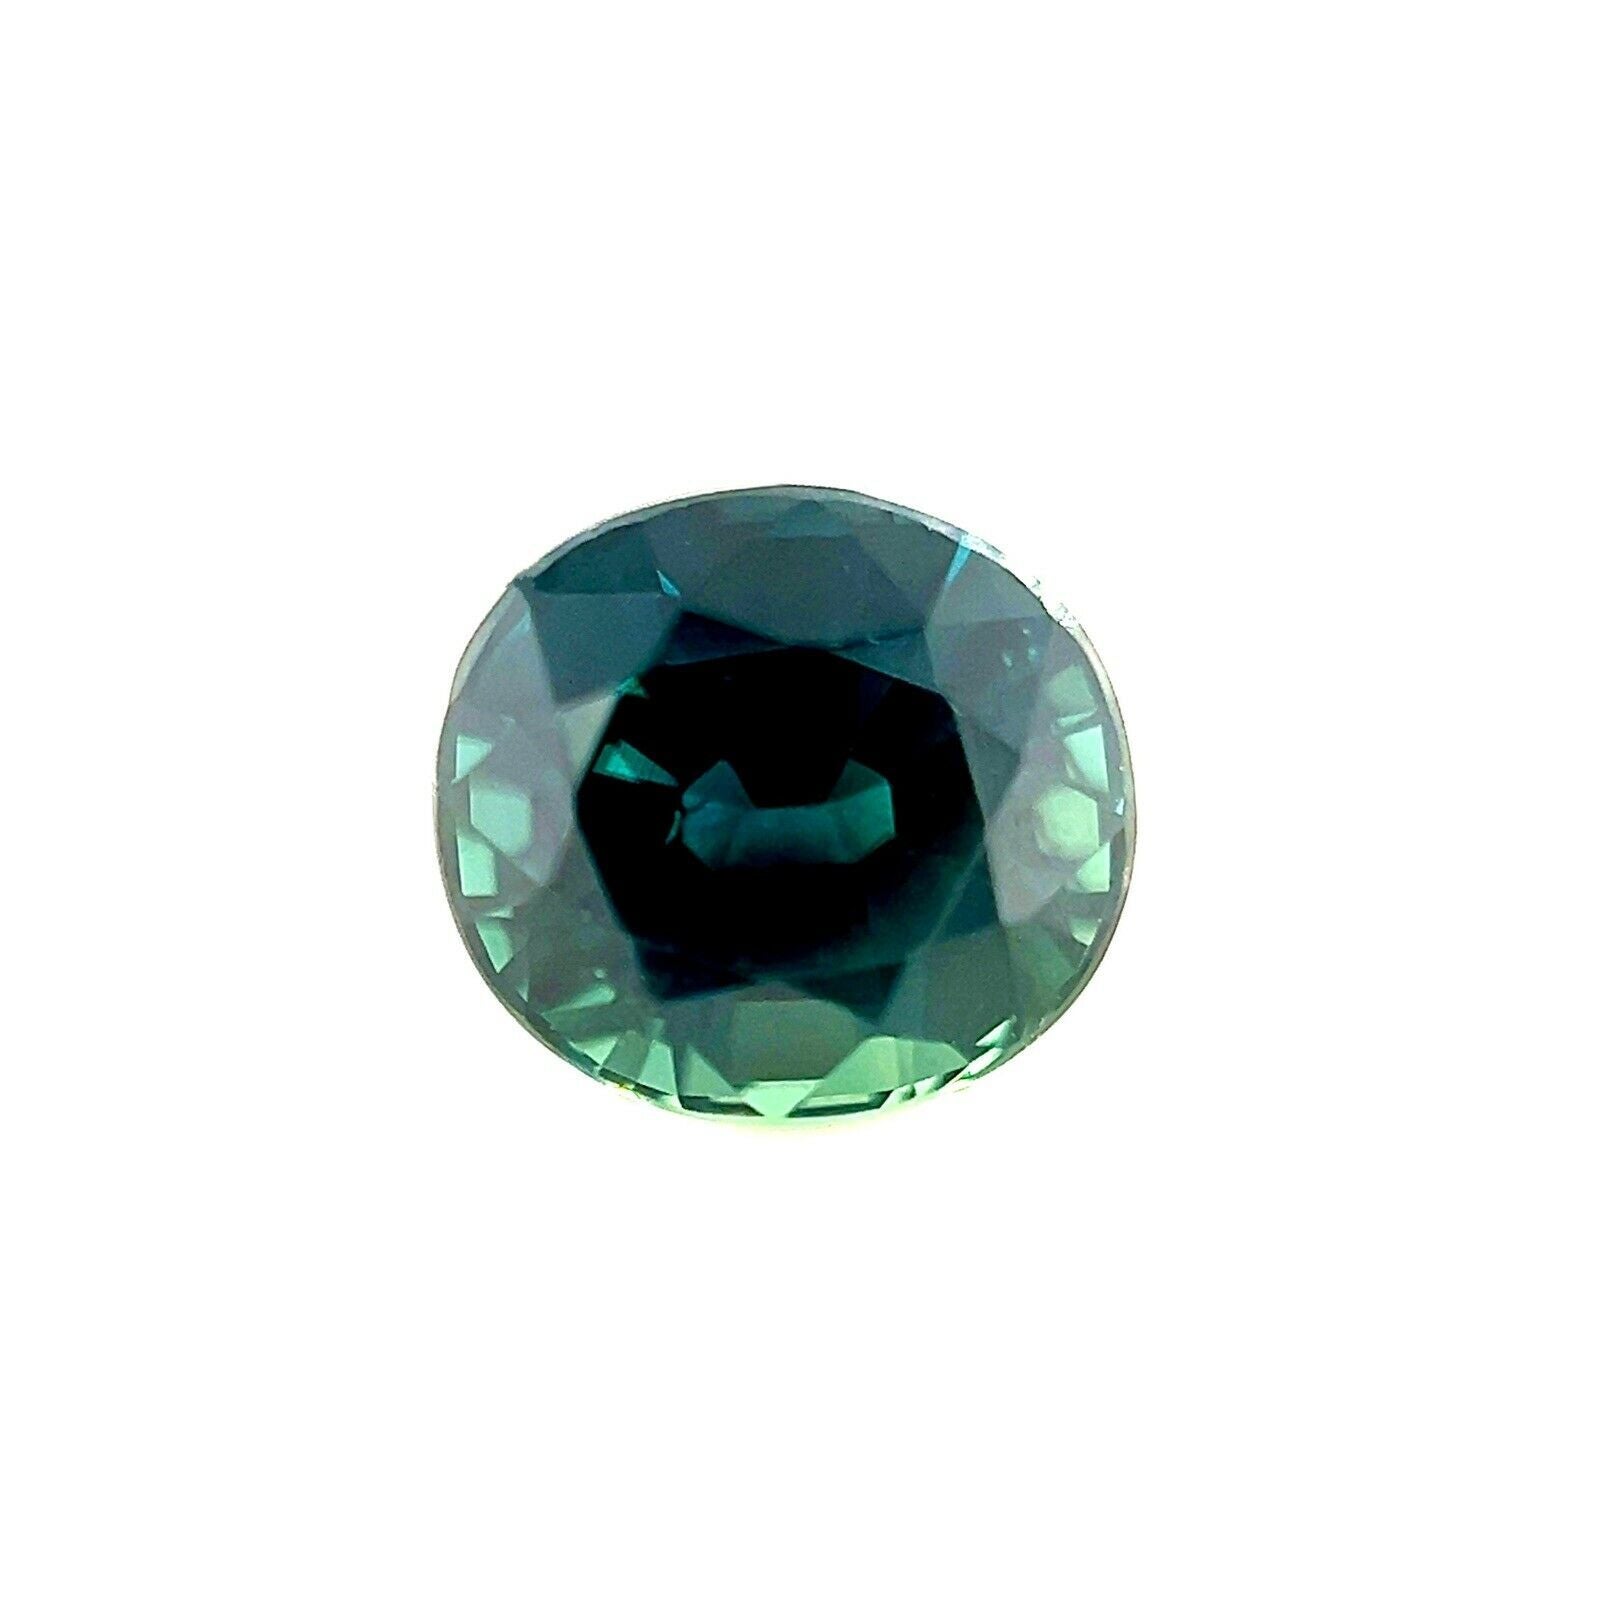 GRA Certified 1.61ct Deep Green Blue Sapphire Untreated Oval Cut Gem For Sale